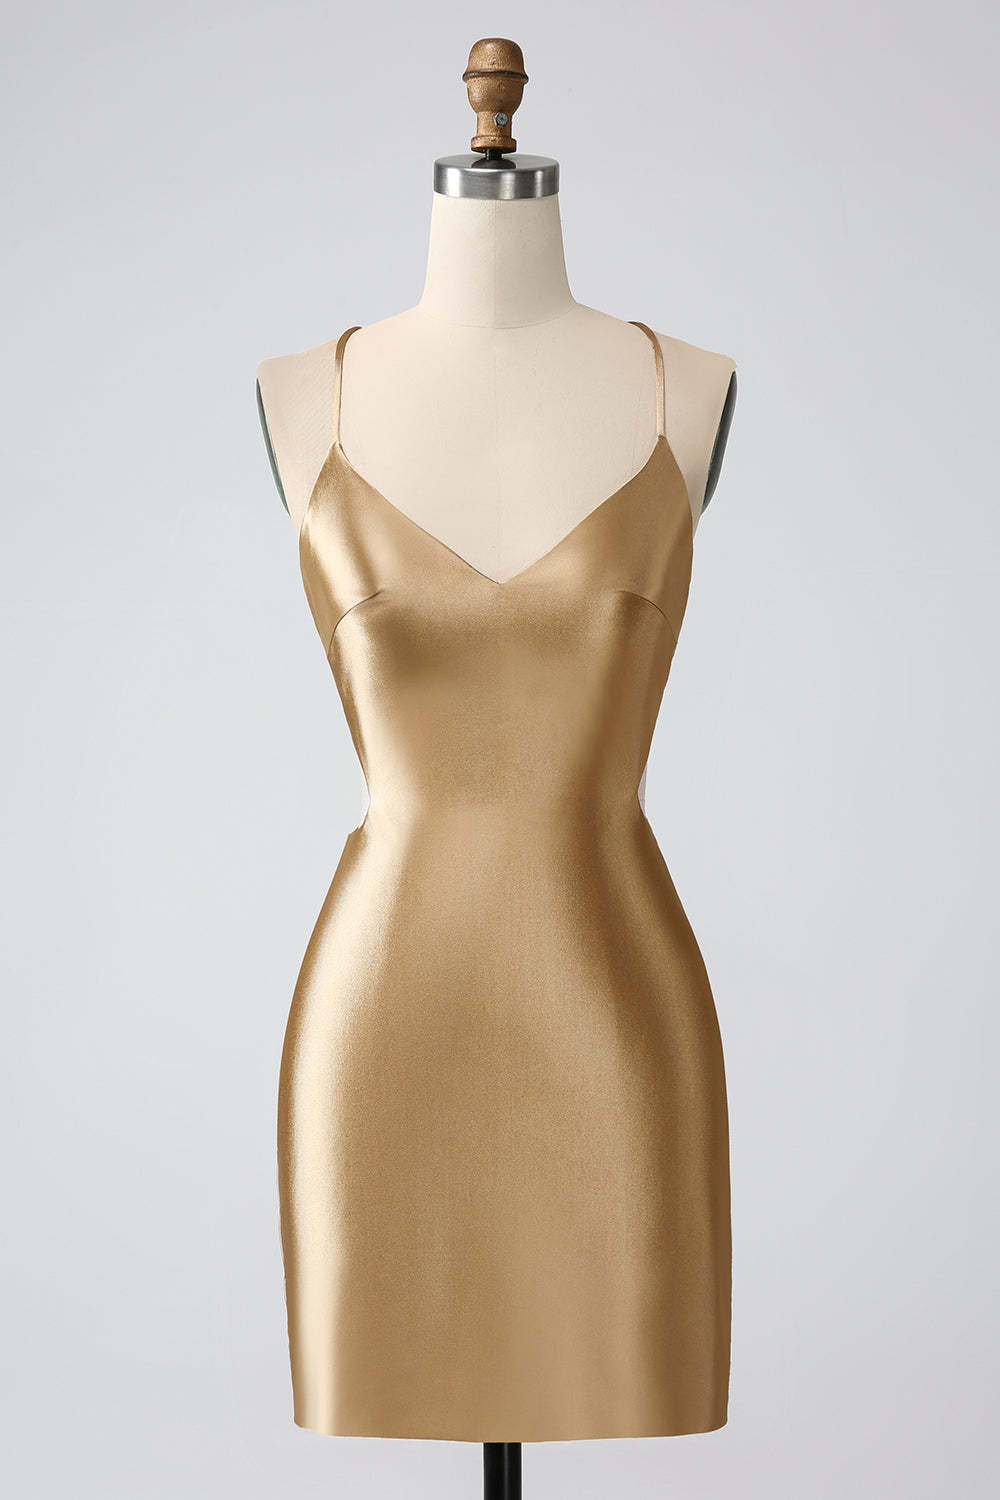 Leely Women Gold Bodycon Mini Homecoming Dress with Criss Cross Back Spaghetti Straps Satin Short Prom Dress